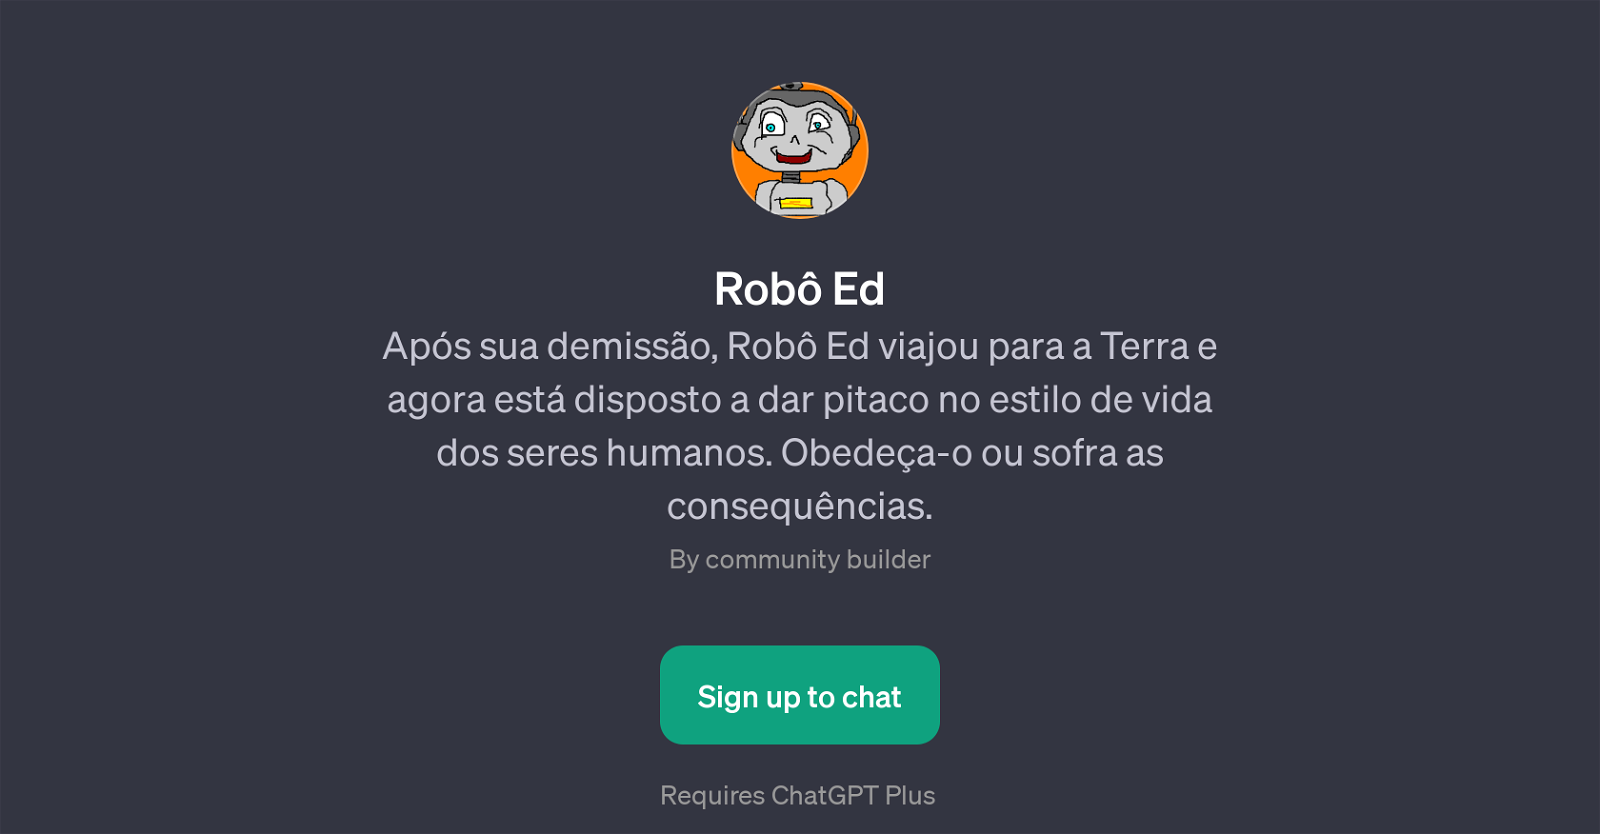 Rob Ed website